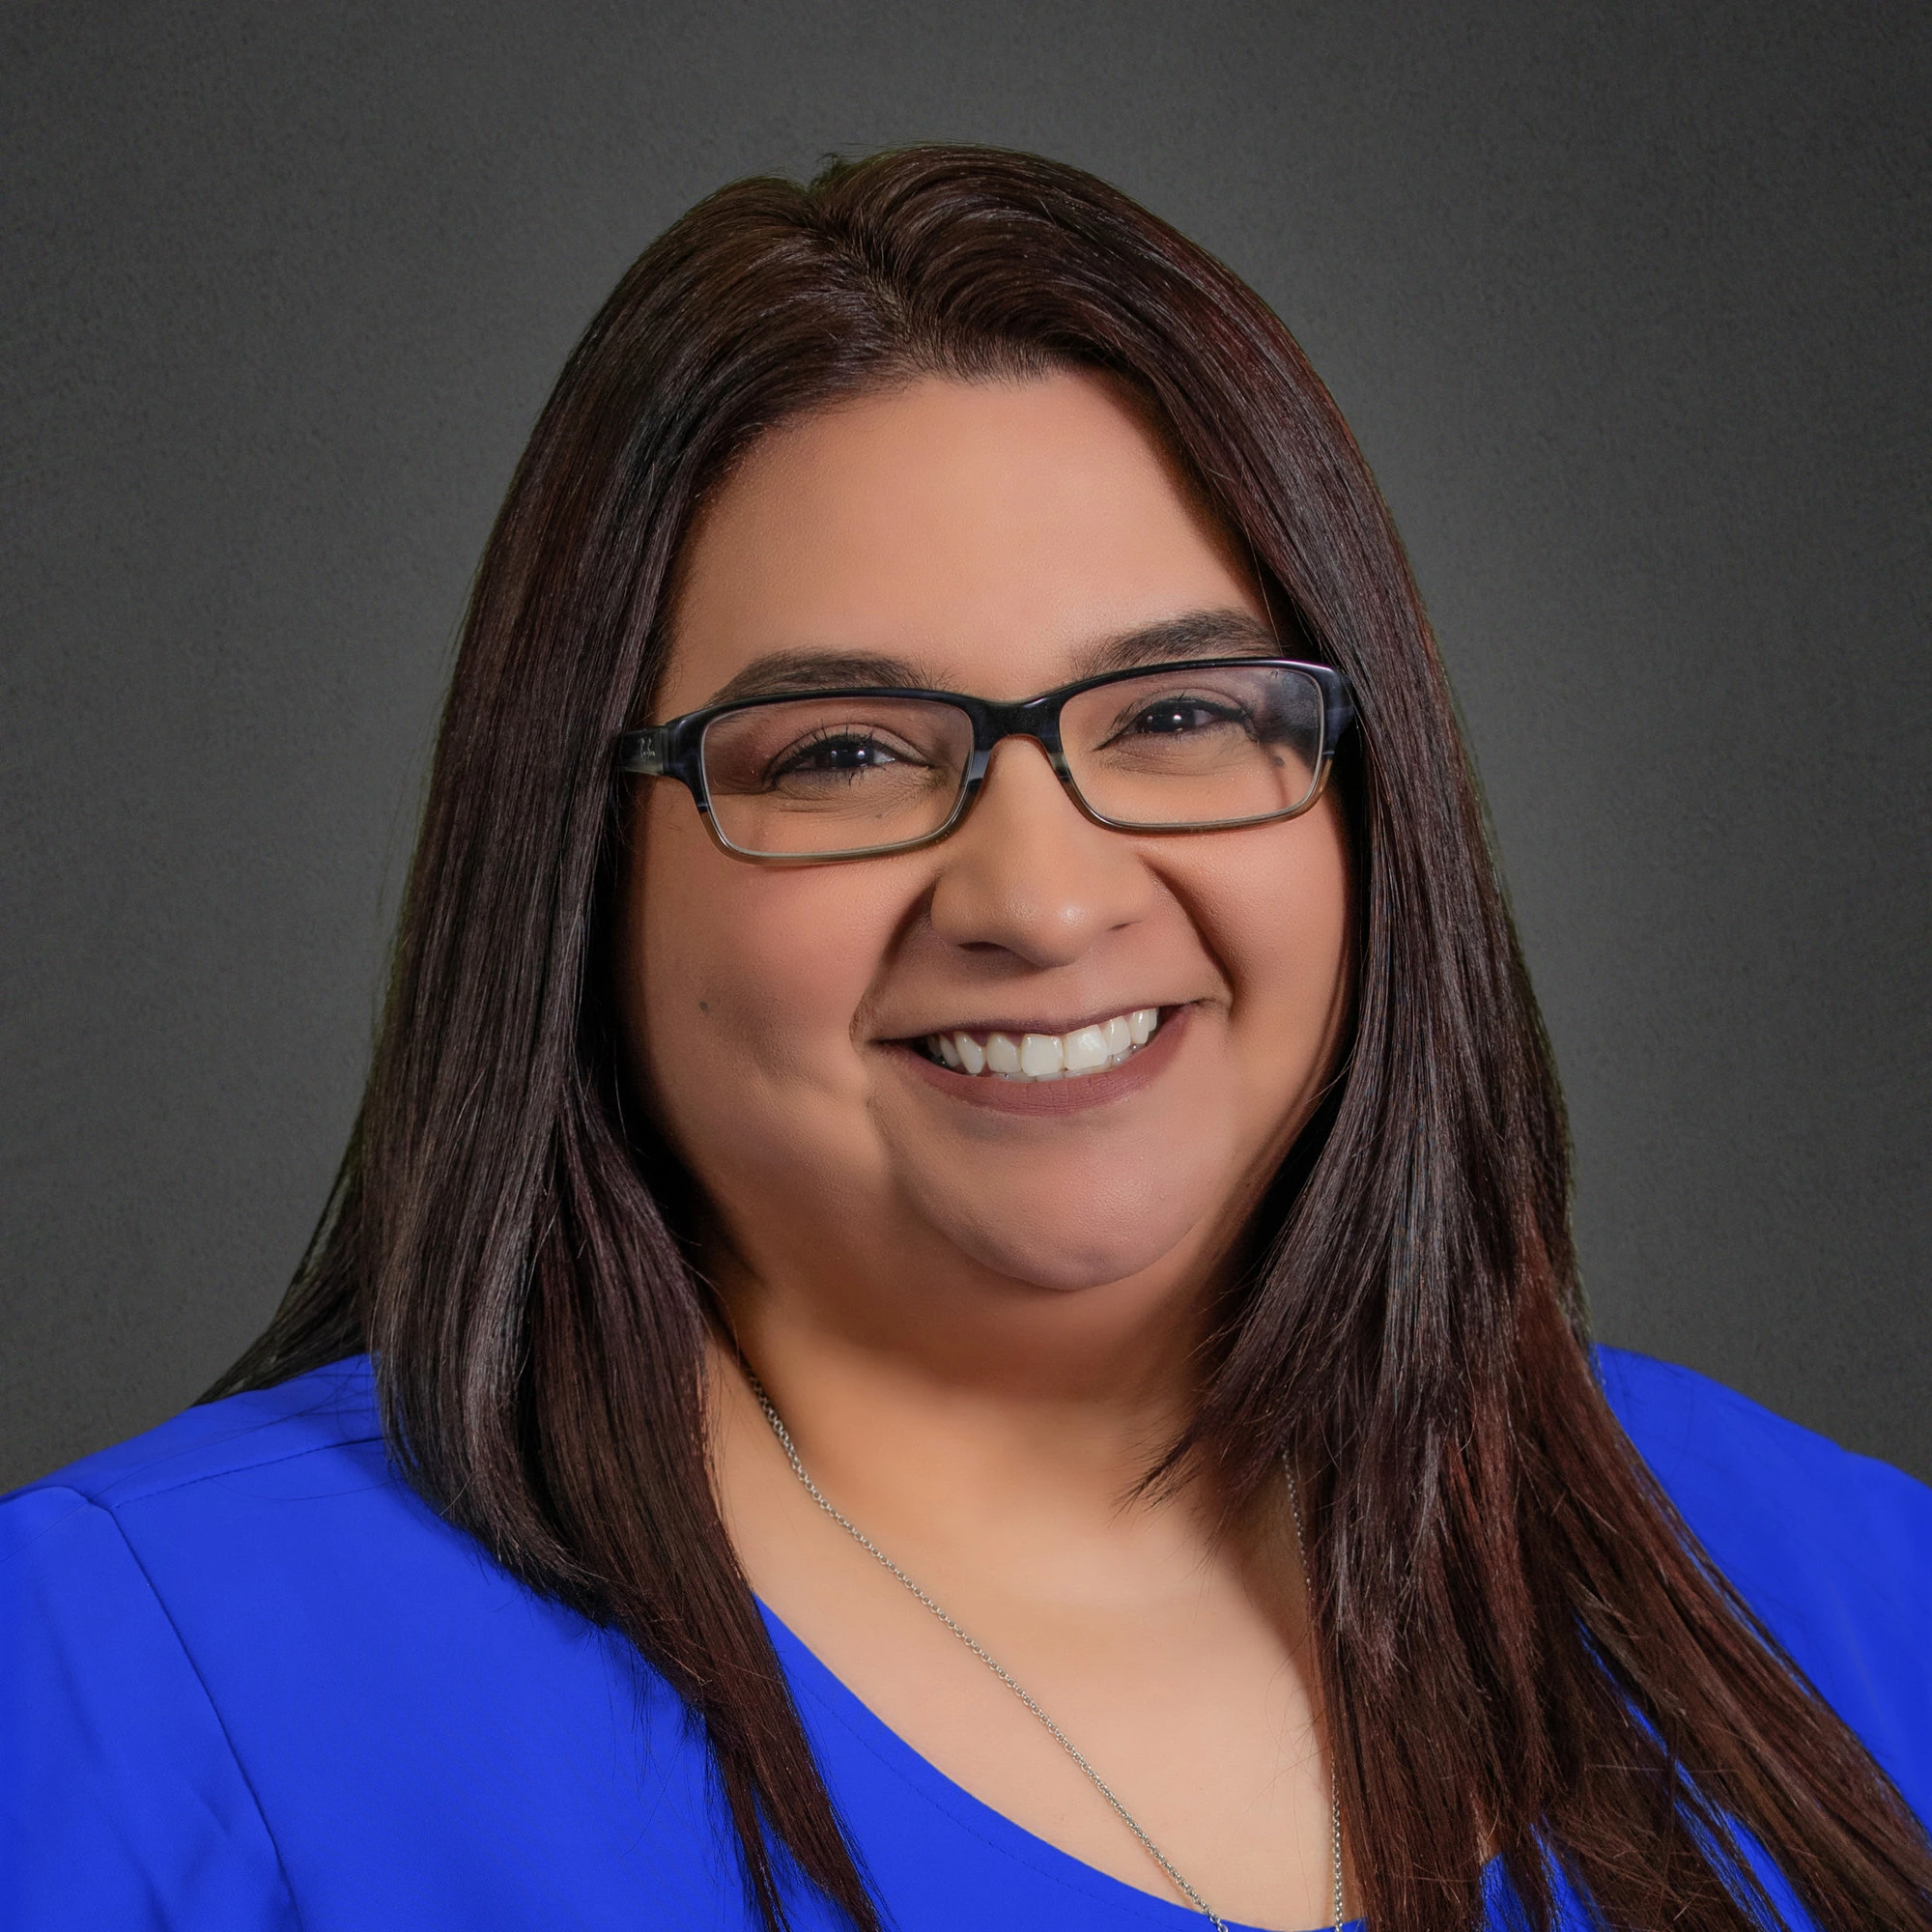 Neldal Insurance - Karina Sanchez. A smiling woman in glasses wearing a blue shirt.